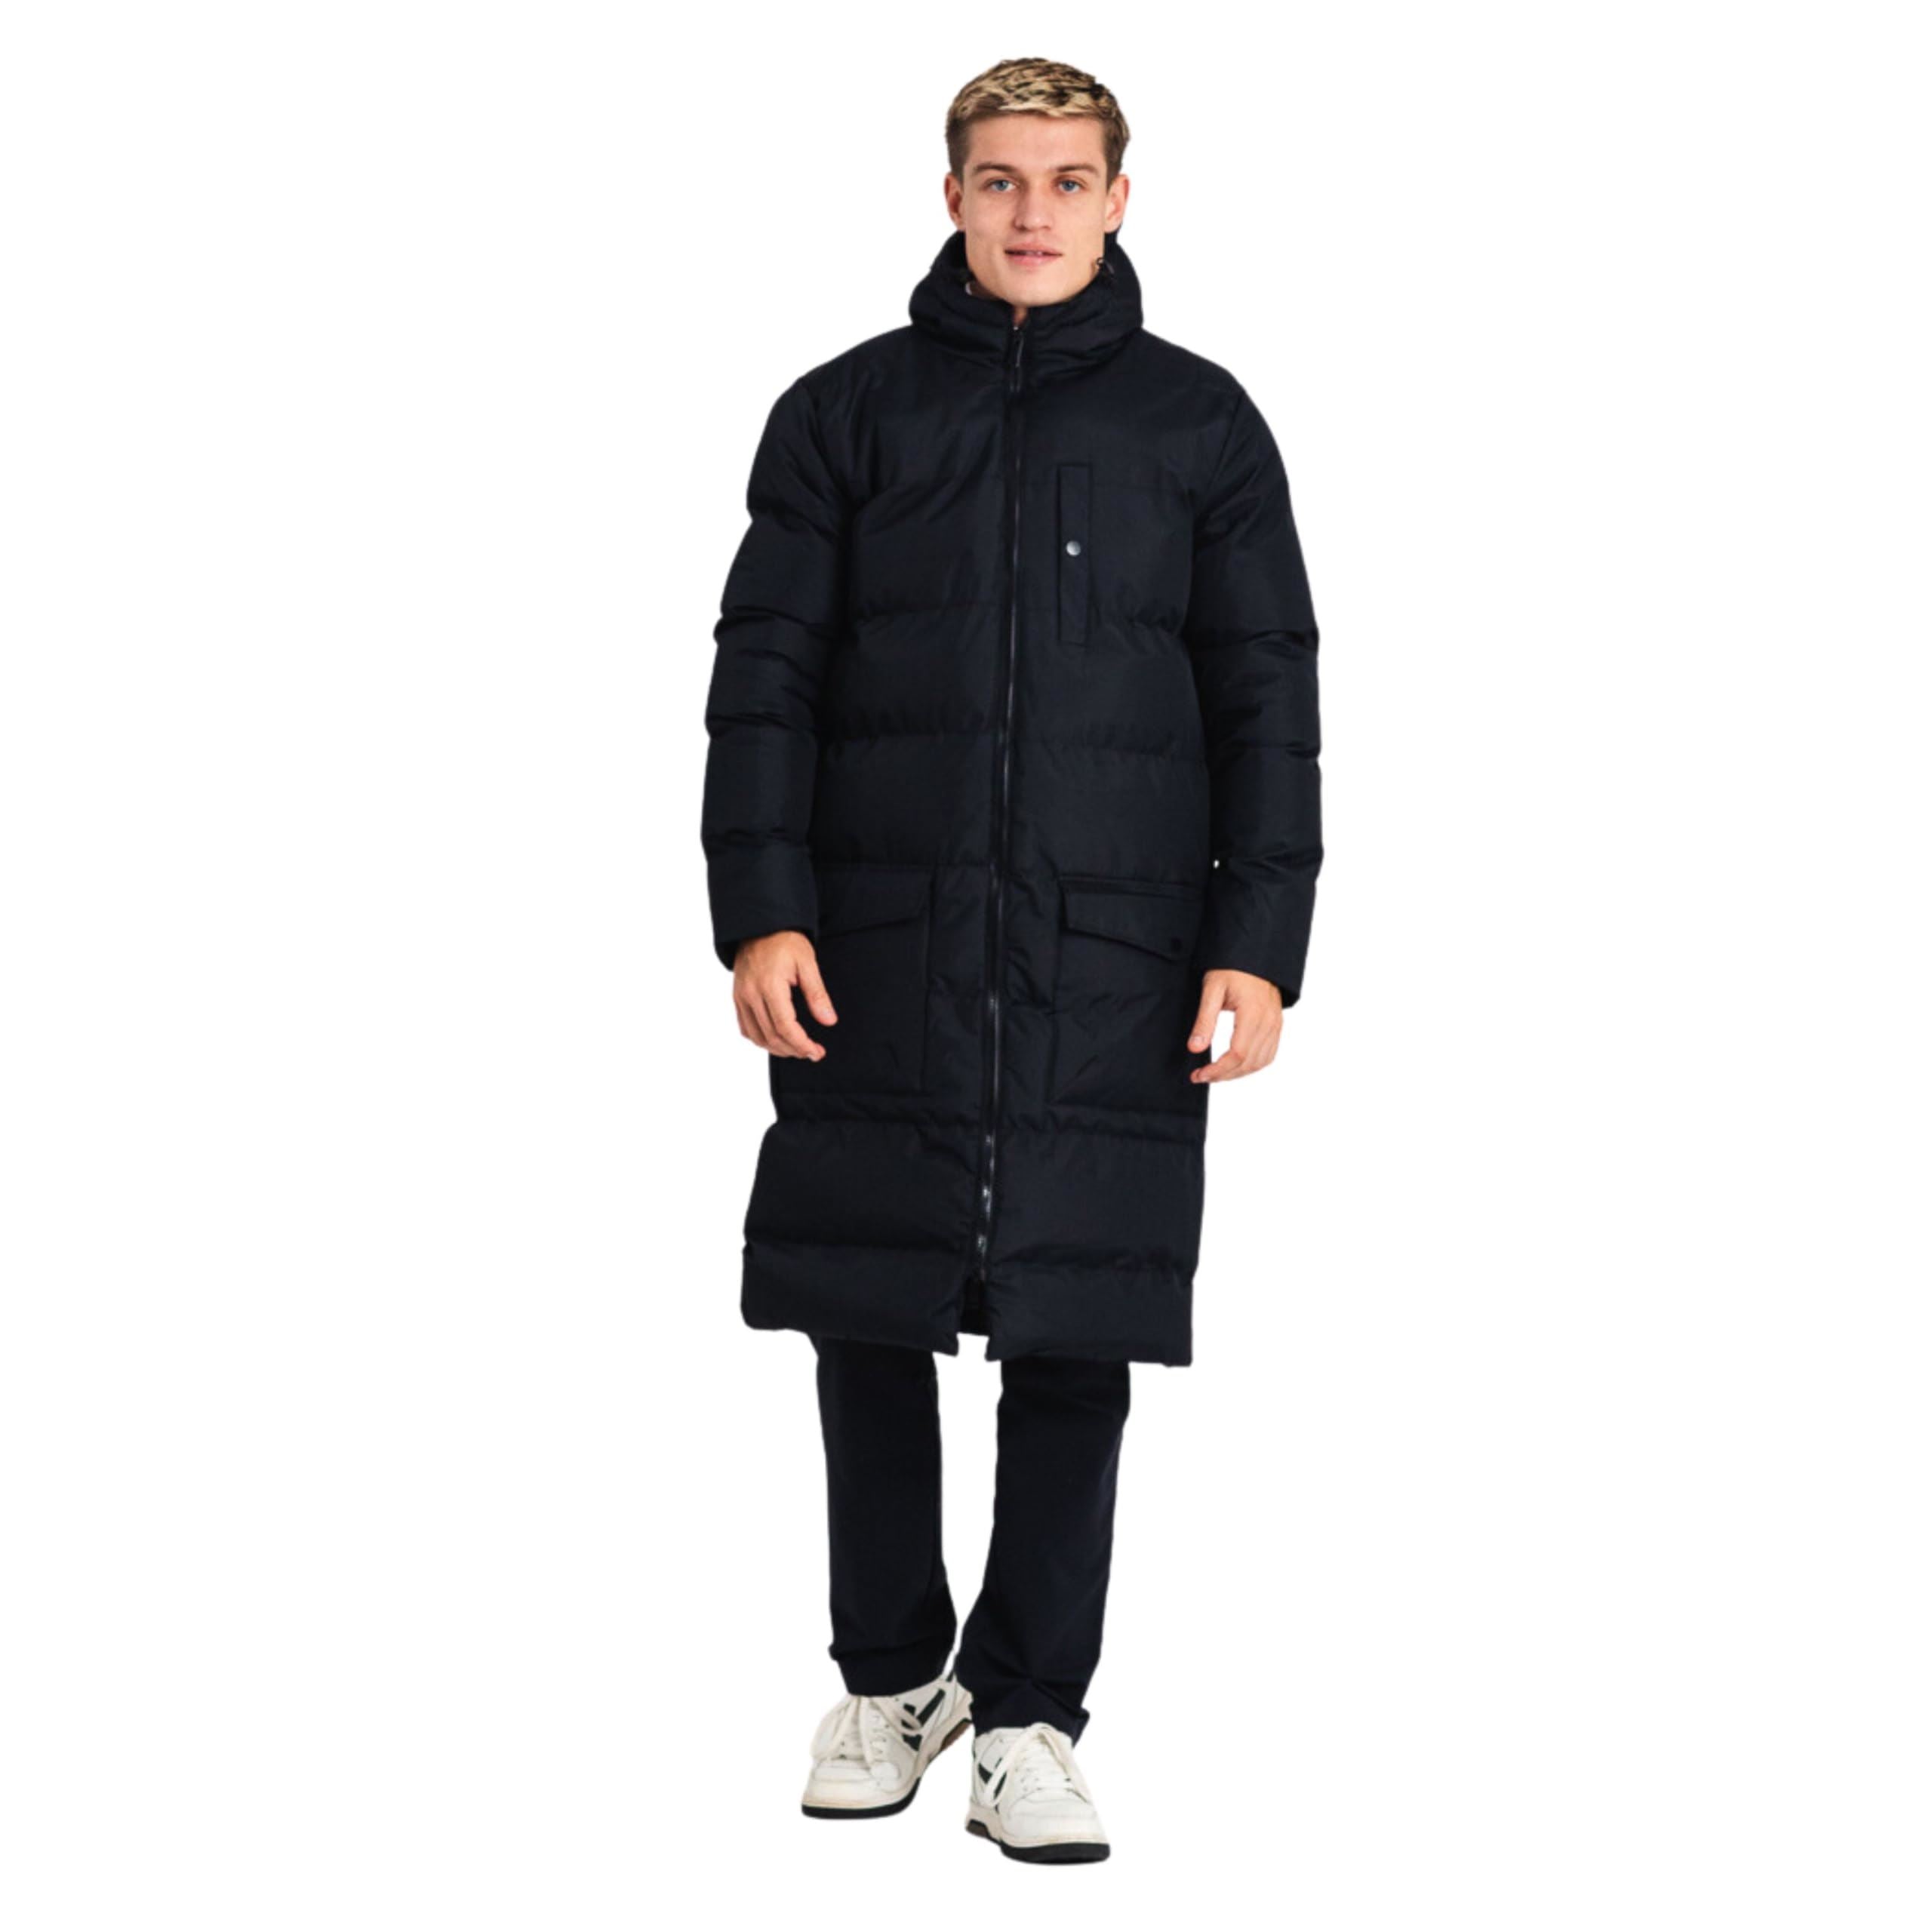 Kandor Men's Longline Winter Jacket - Padded Parka with Hood, Knee-Length  Smart Casual Water-Resistant UK Coat, Showerproof (MJ-Banana, Black)